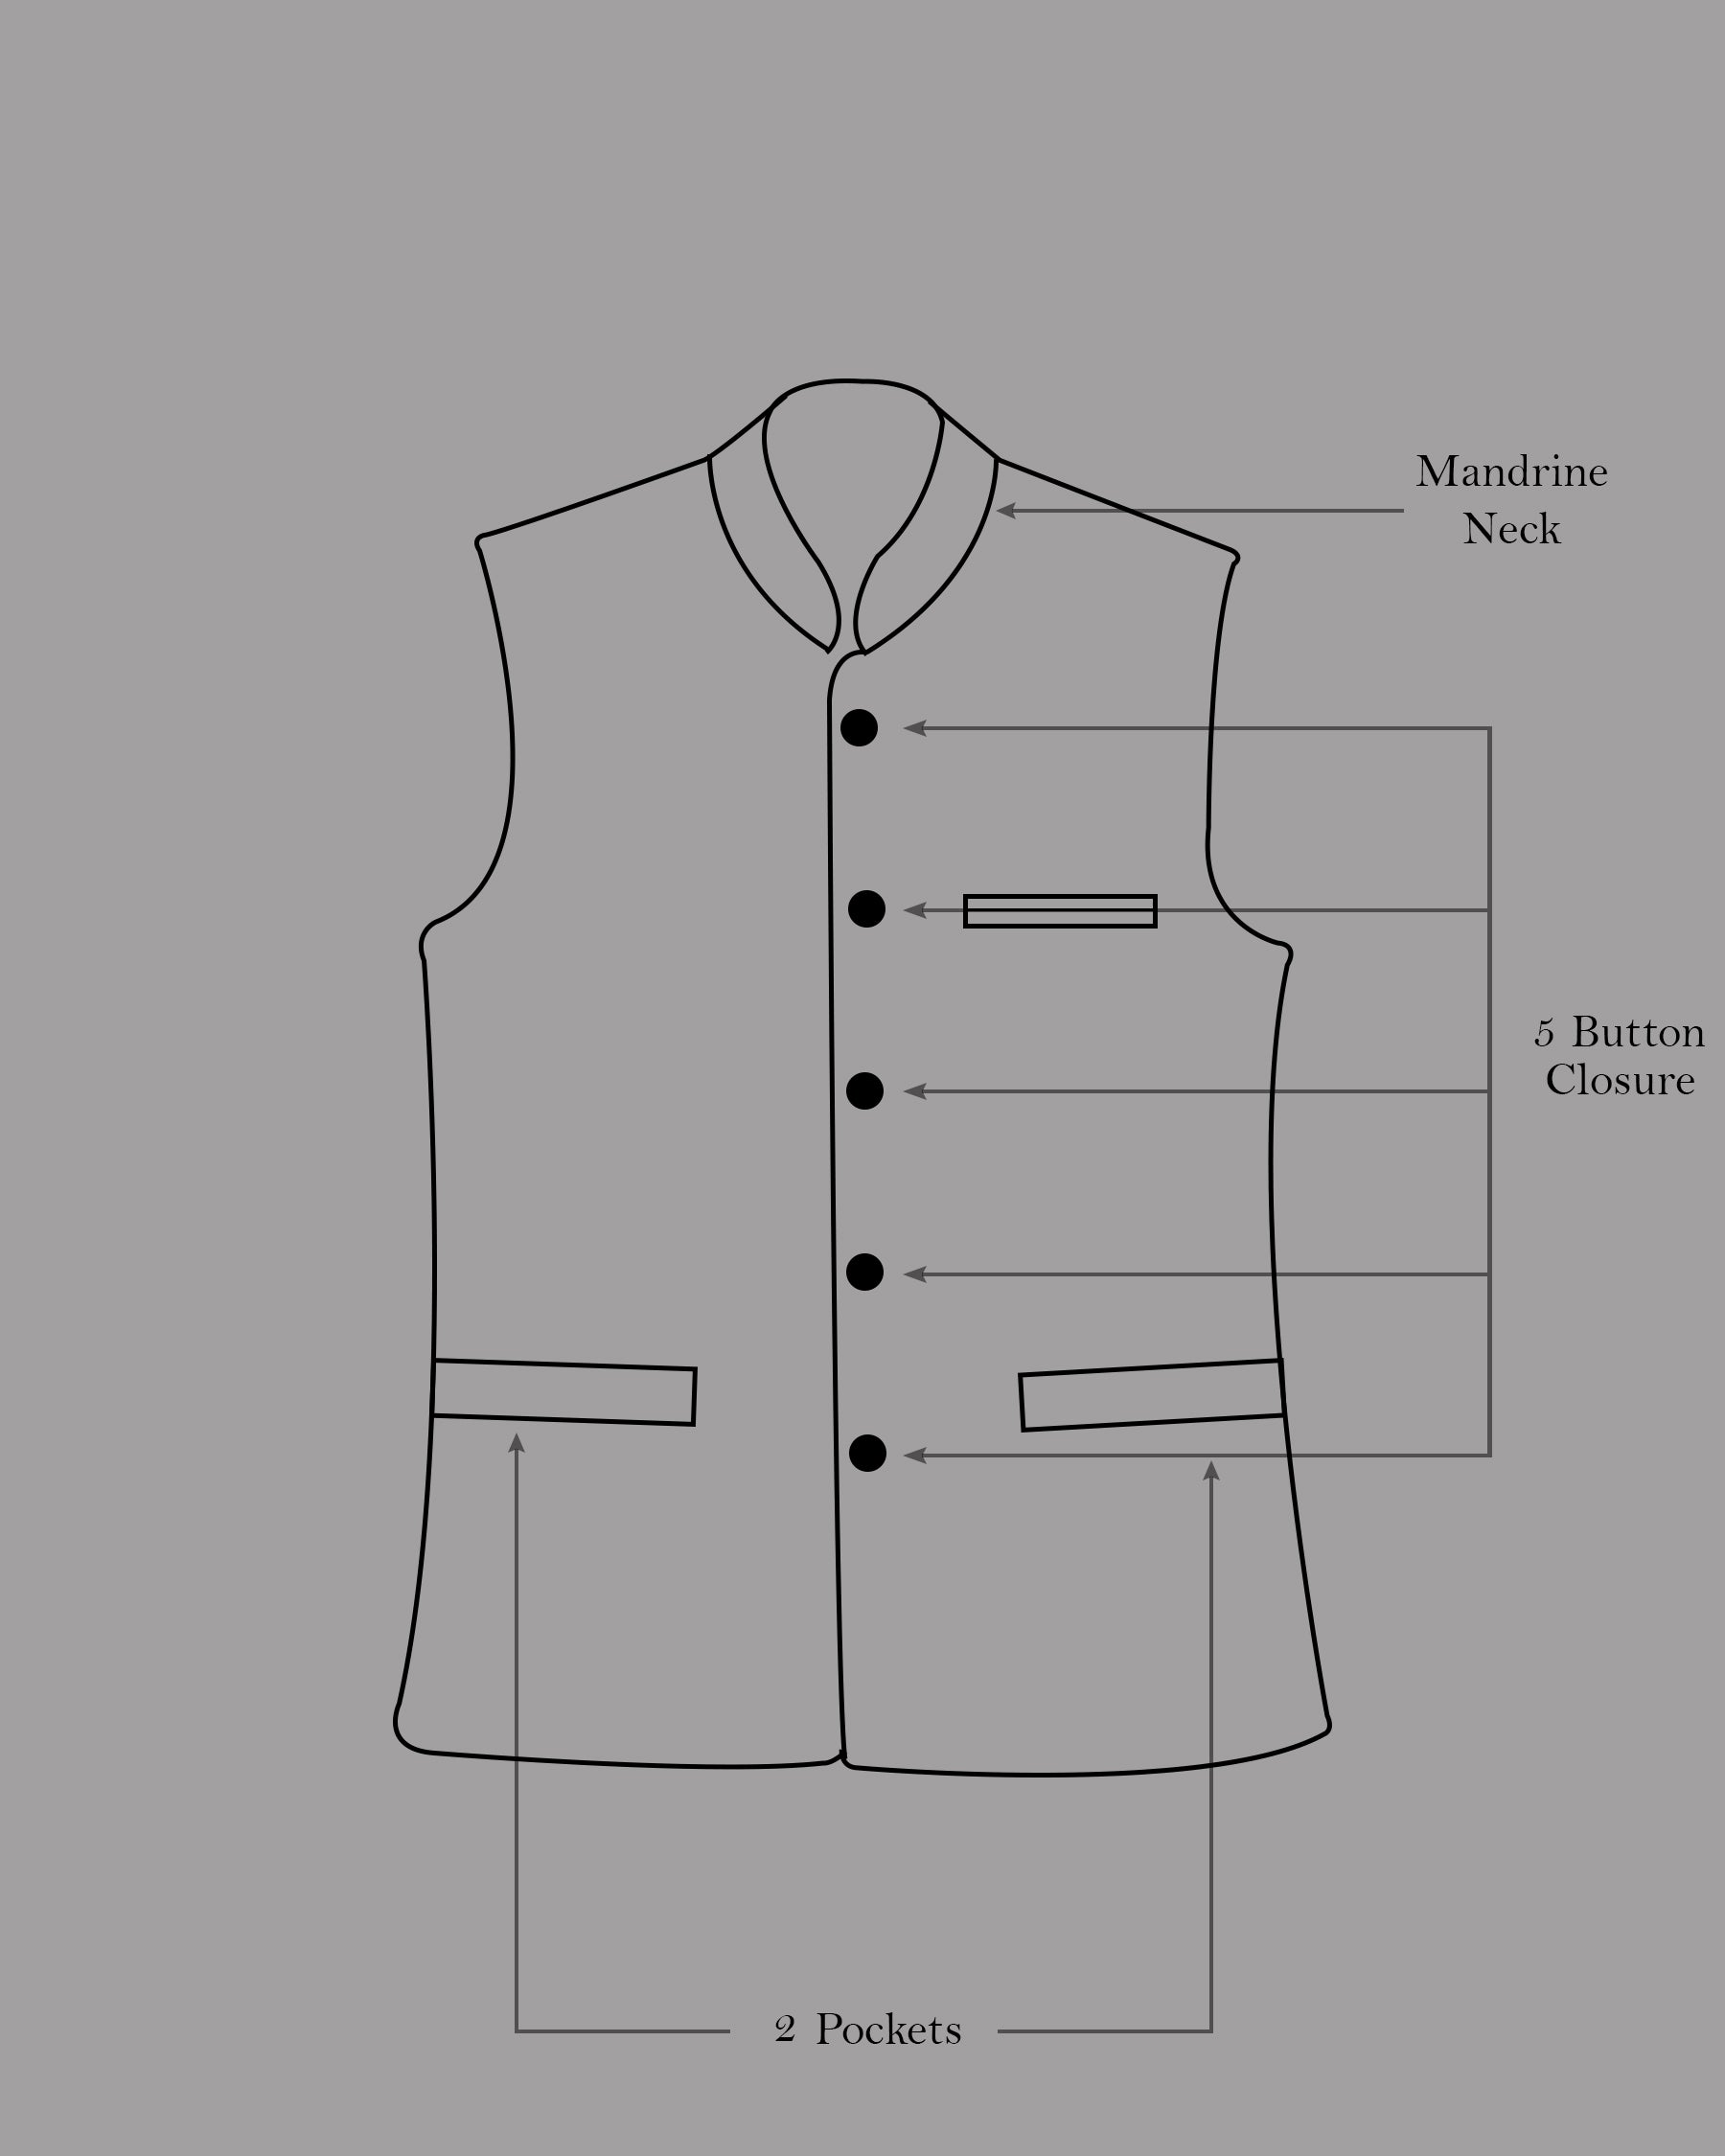 Birch Brown Plaid Cross Placket Bandhgala Suit